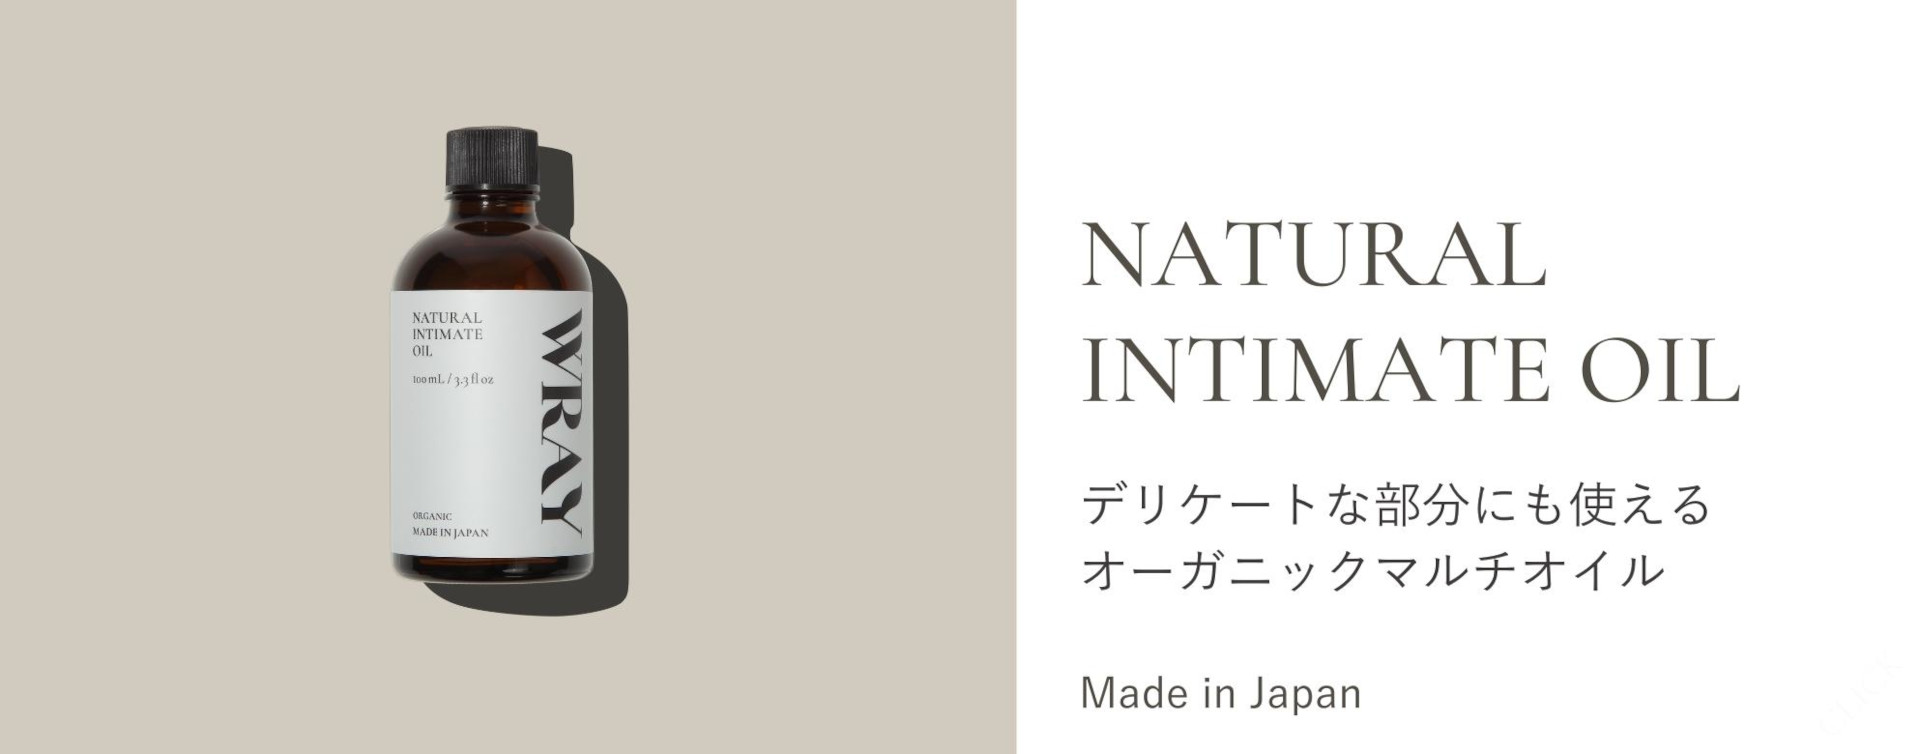 WRAY ナチュラルインティメイトオイル デリケートな部分にも使える オーガニックマルチオイル Made in Japan バナー